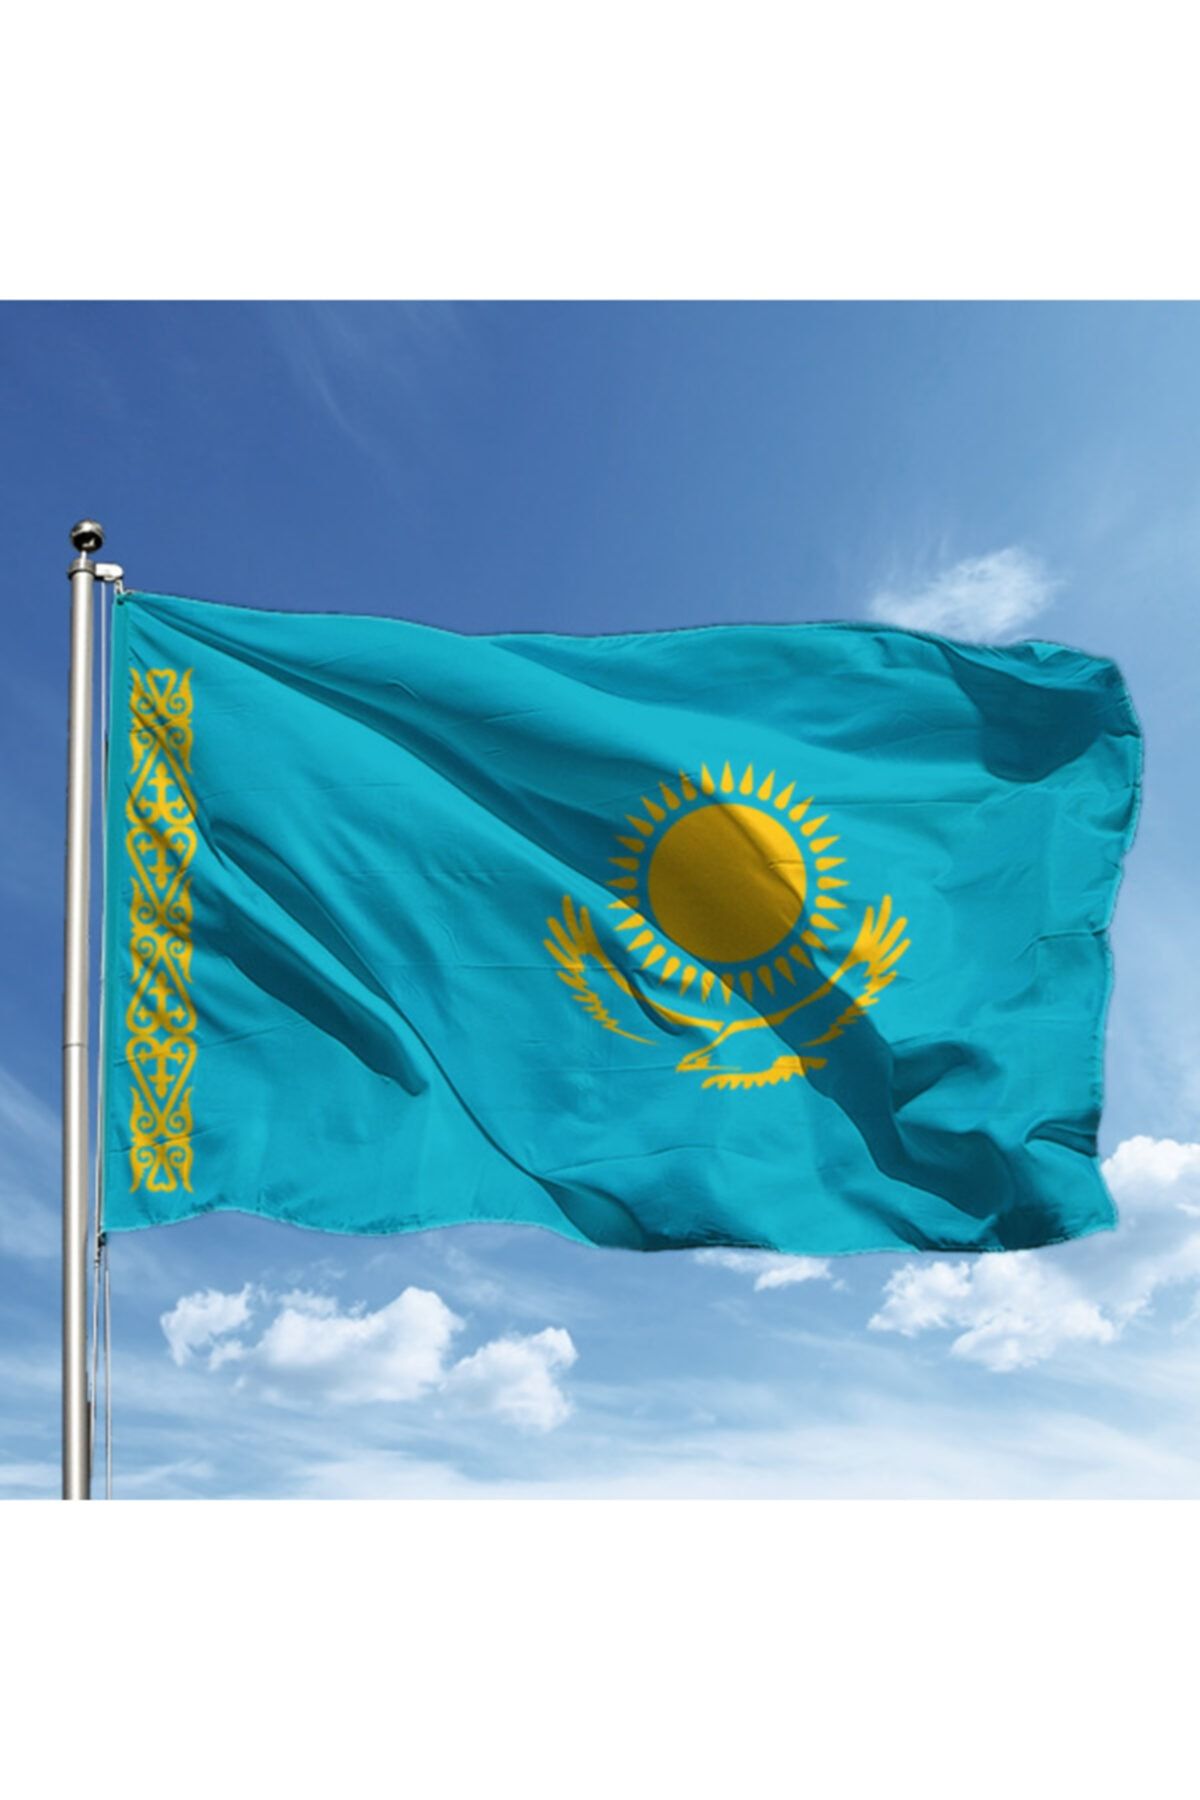 Özgüvenal Kazakistan Bayrağı 70x105